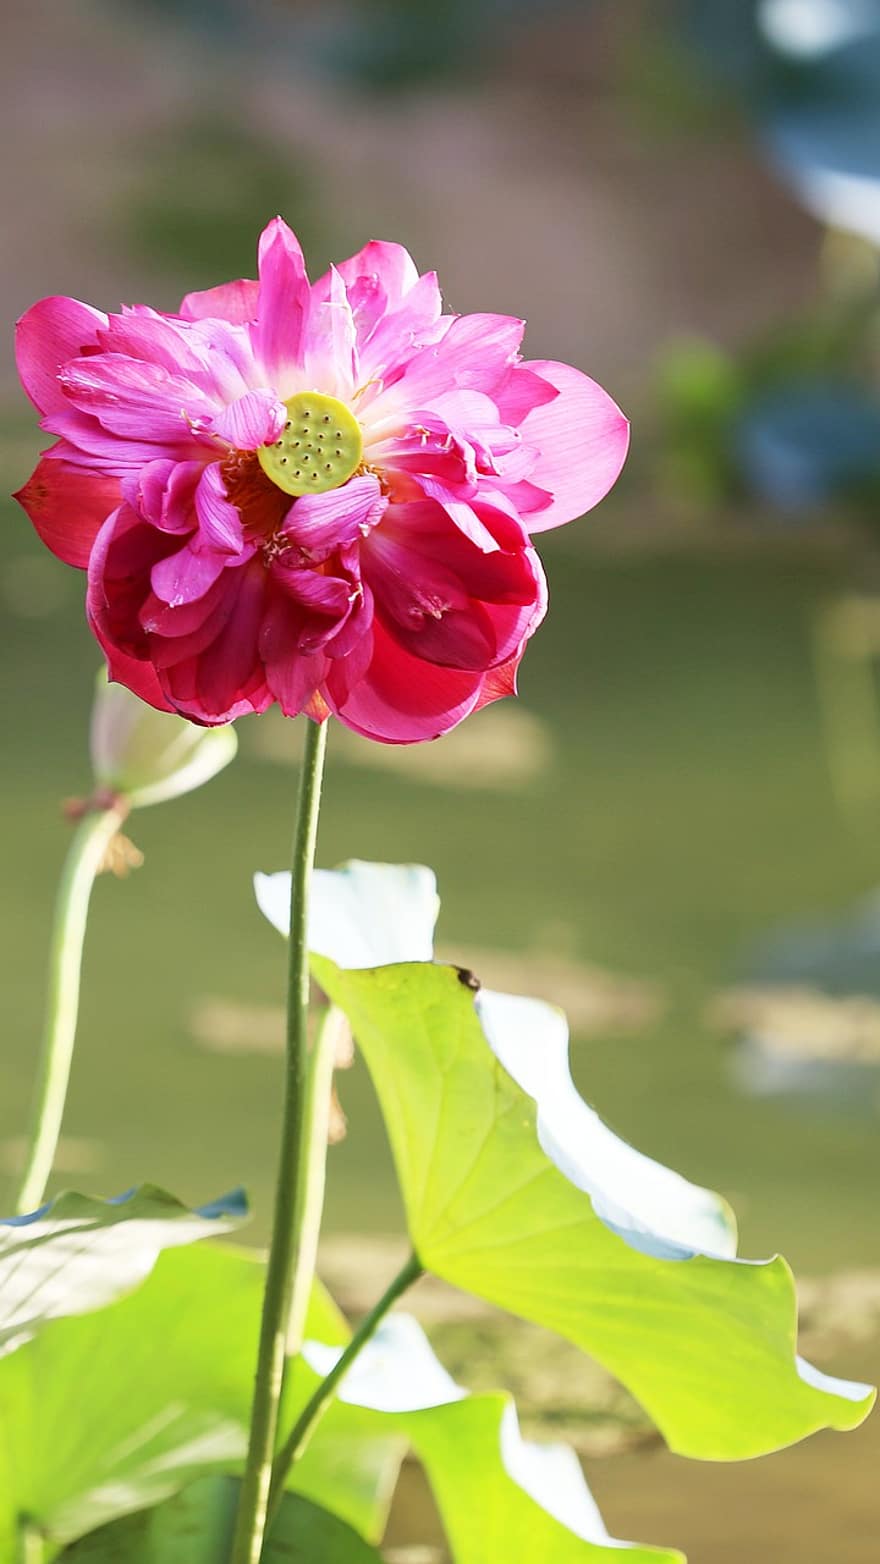 Lotus, Xixiang County, Hanzhong, School Garden, Community, Landscape, plant, summer, flower, leaf, close-up